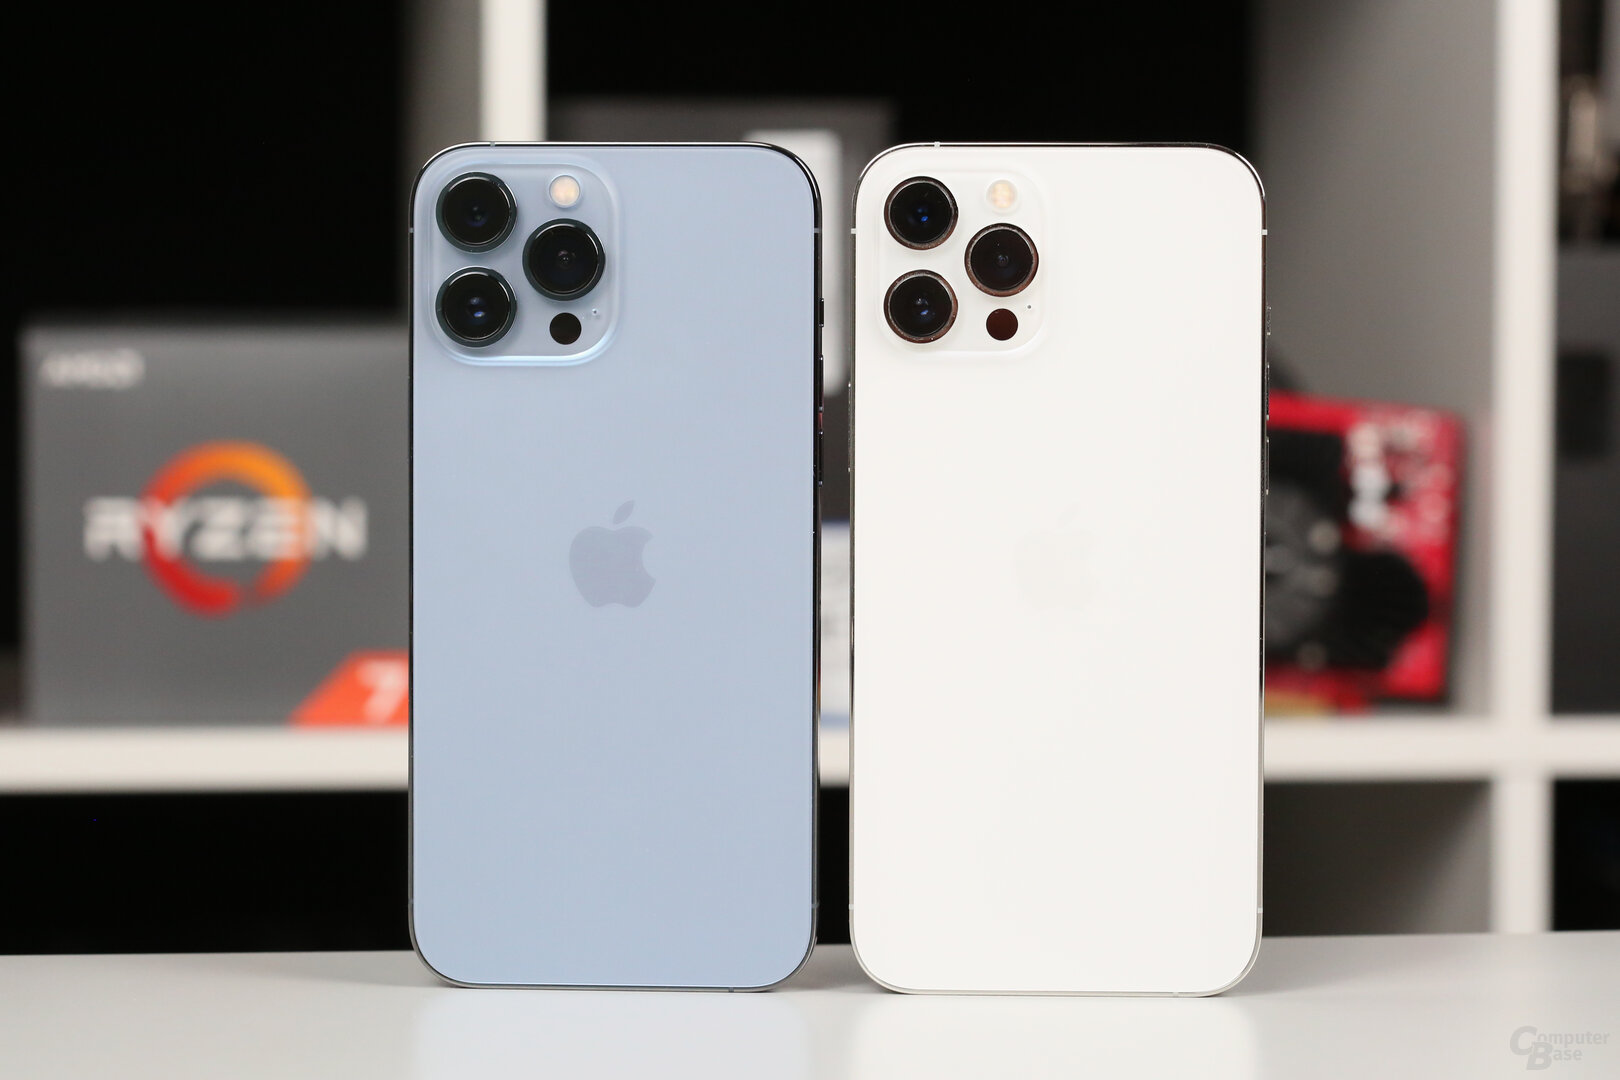 iPhone 13 Pro Max in Sierrablau neben iPhone 12 Pro Max in Weiß